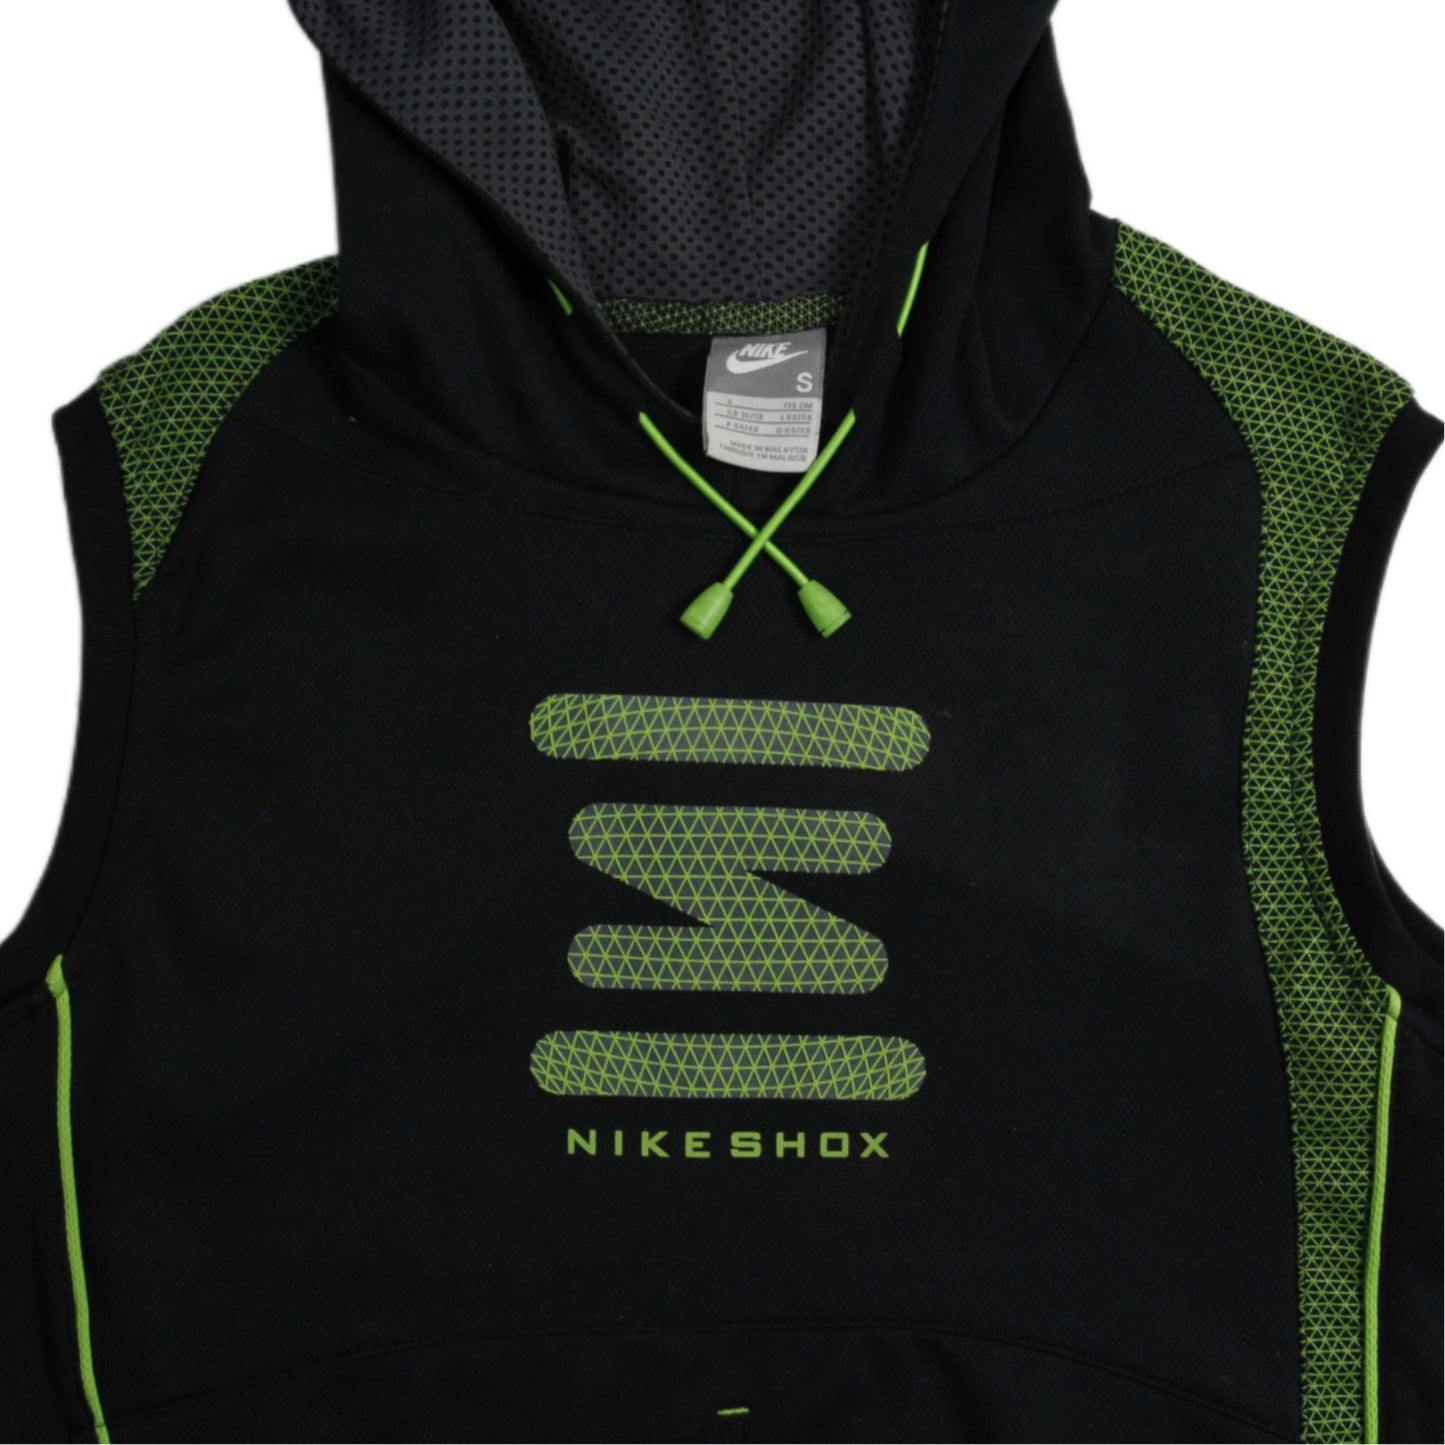 Nike Shox Hooded Tanktop neon green black